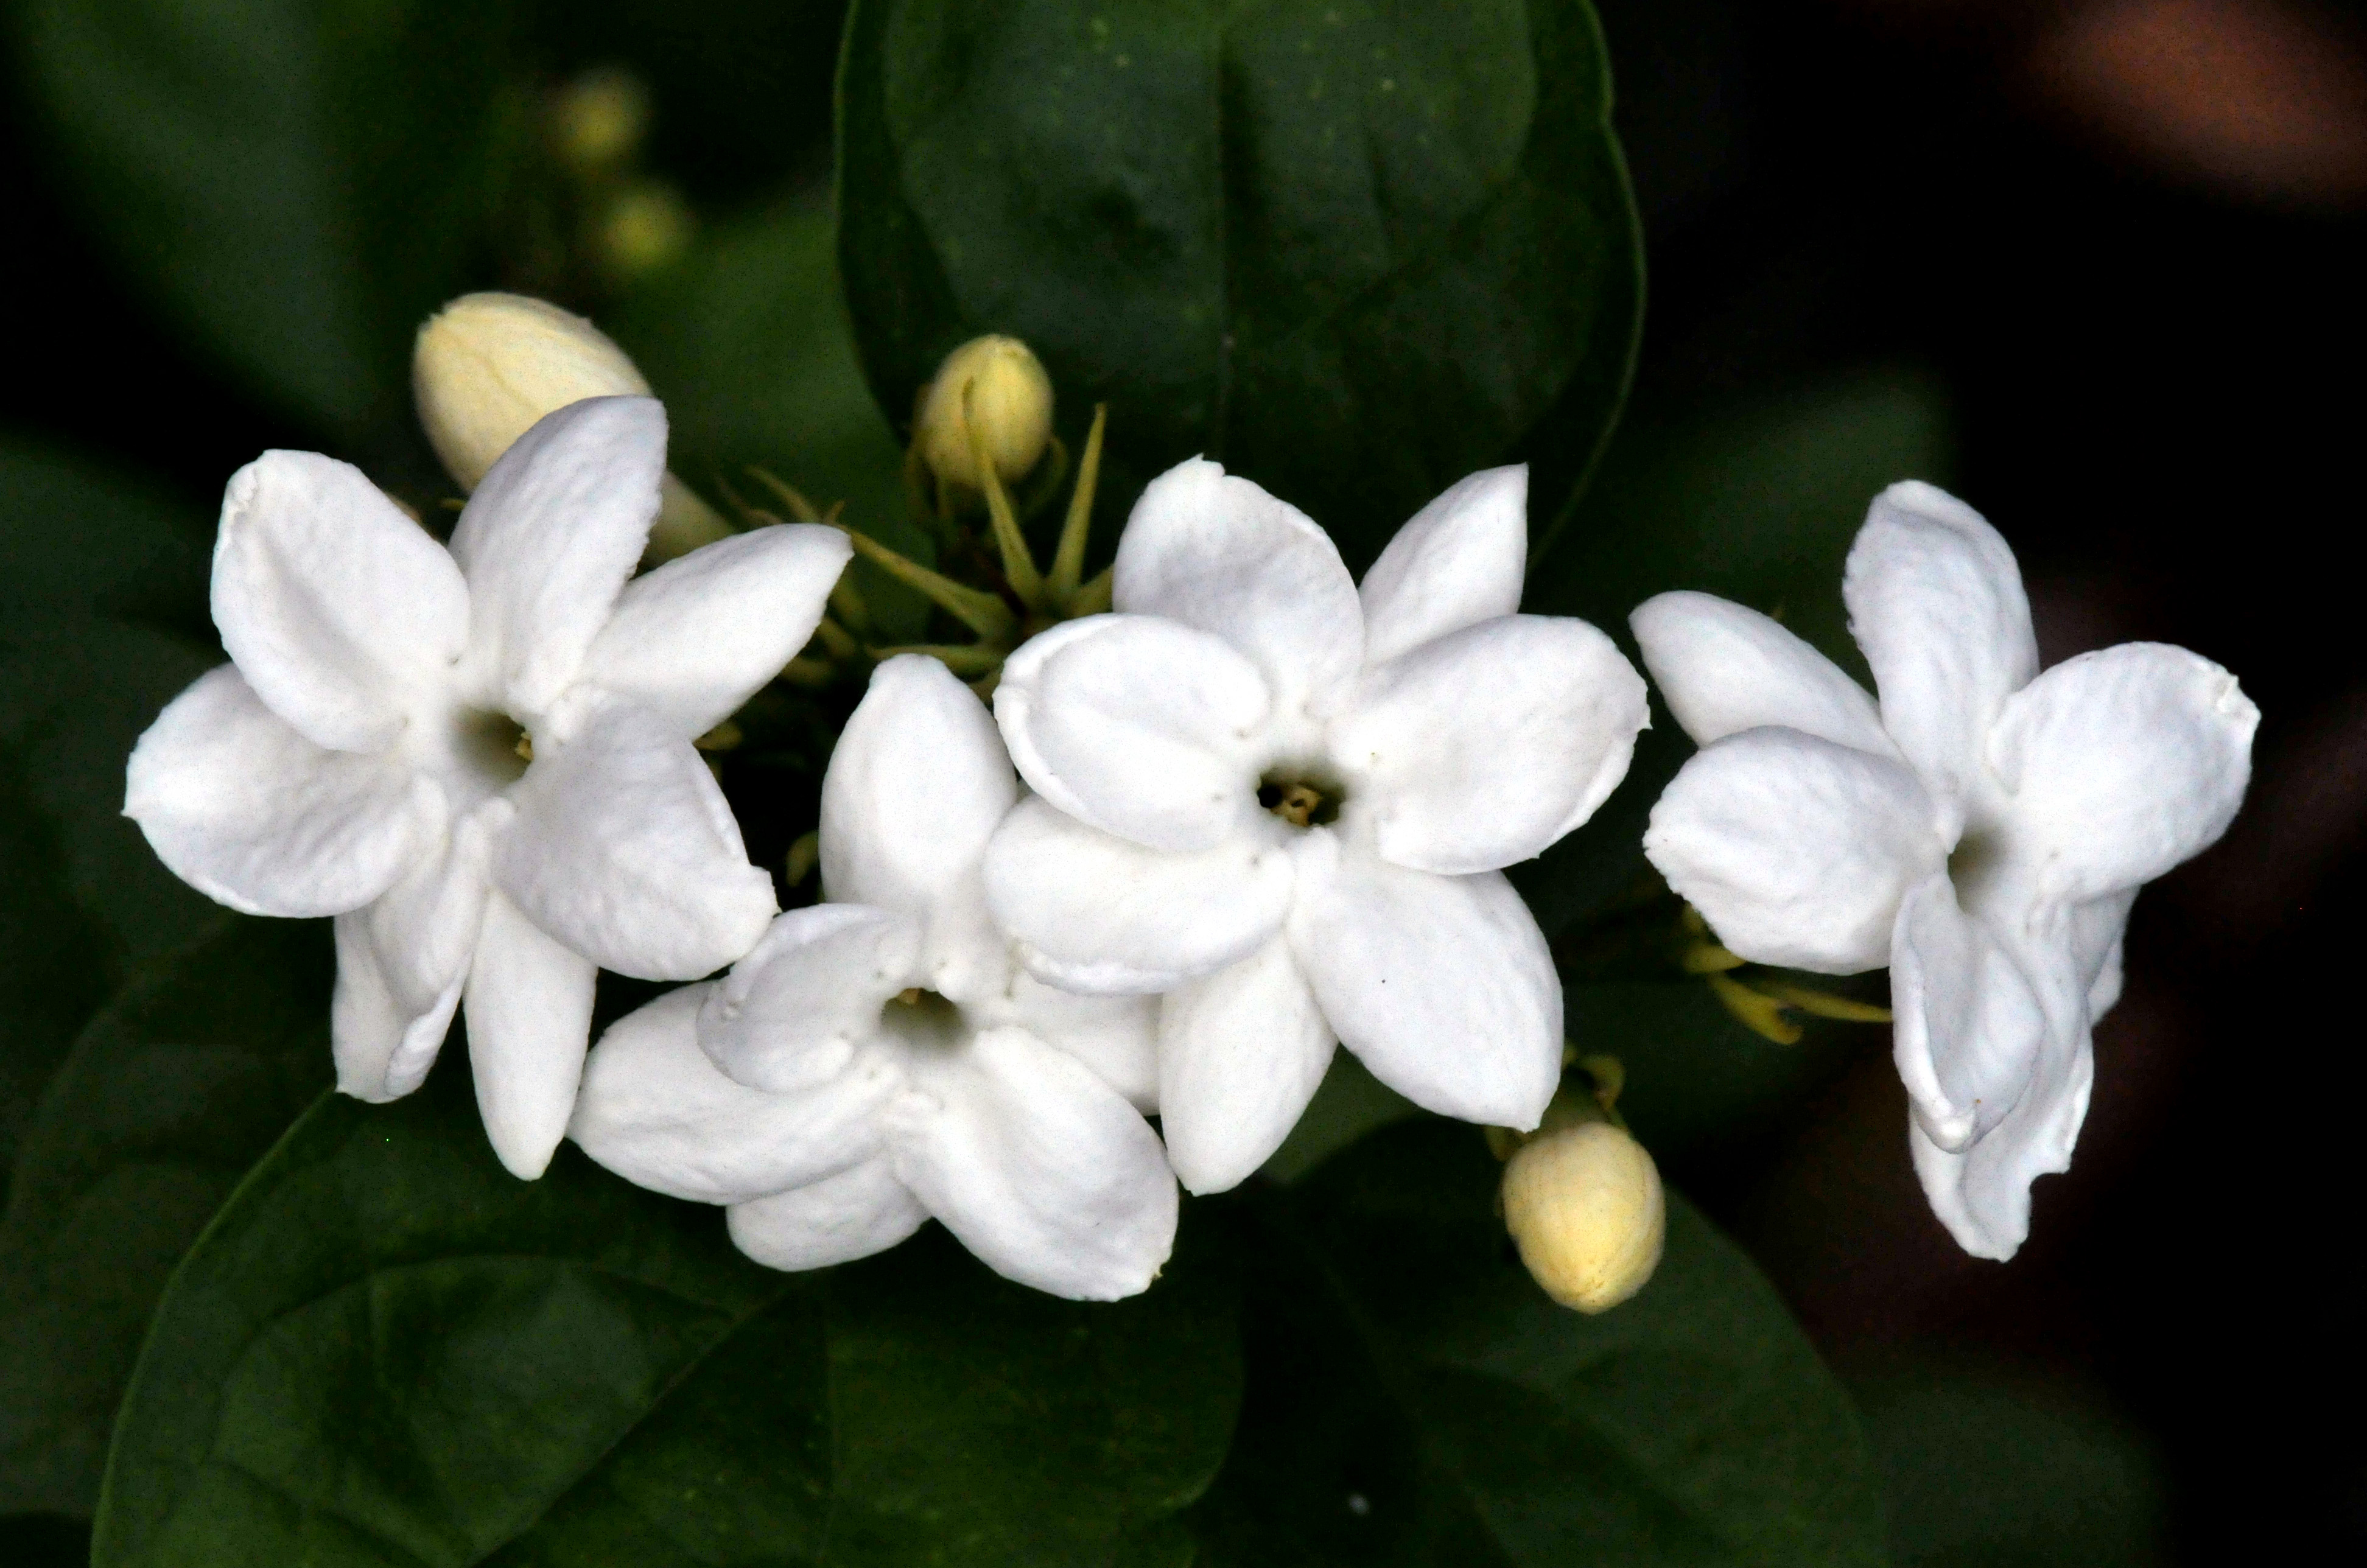 Health benefits of Flowering plant- Jasmine